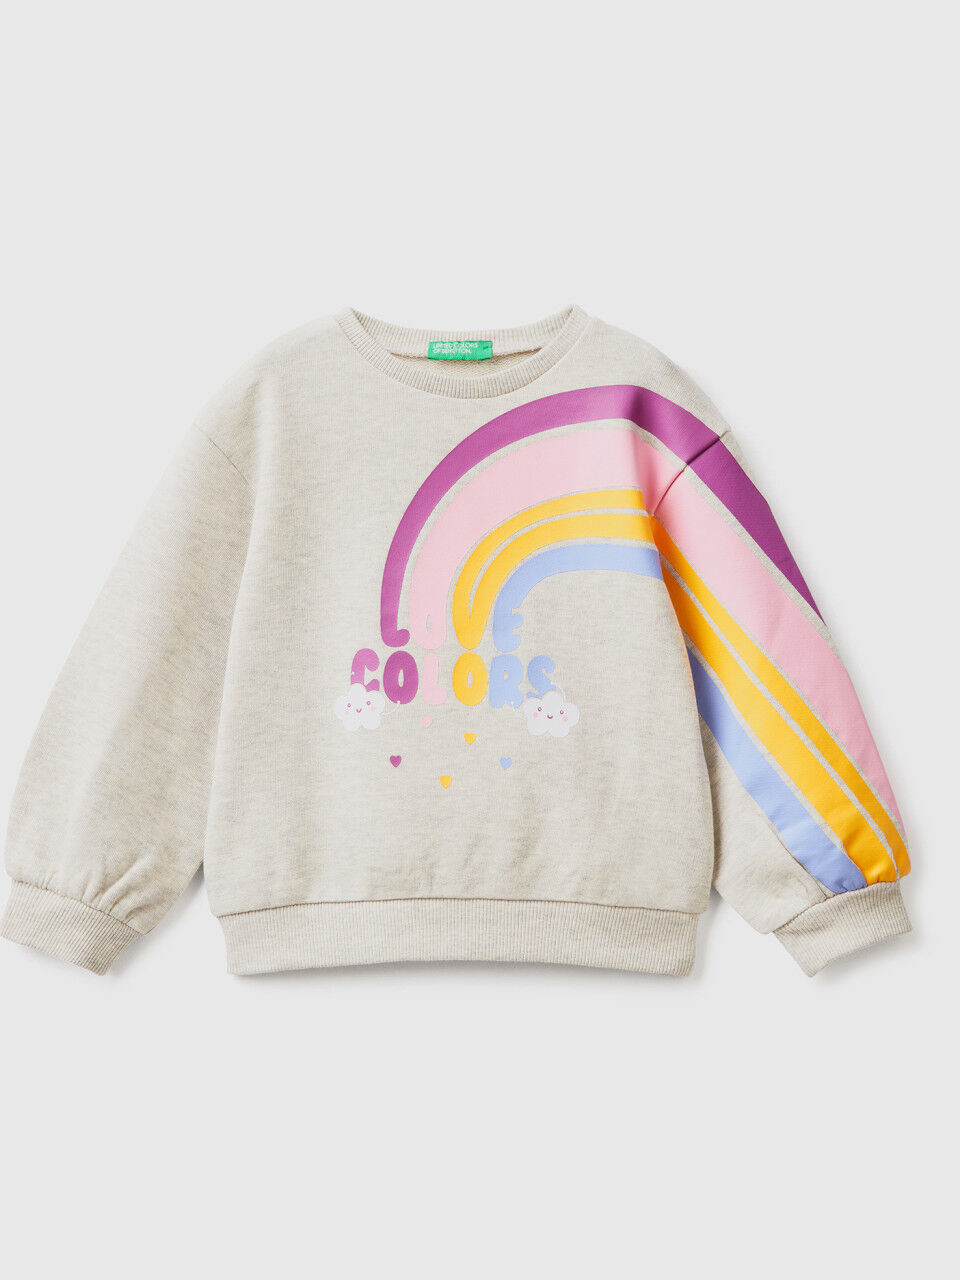 Pullover sweatshirt with rainbow print